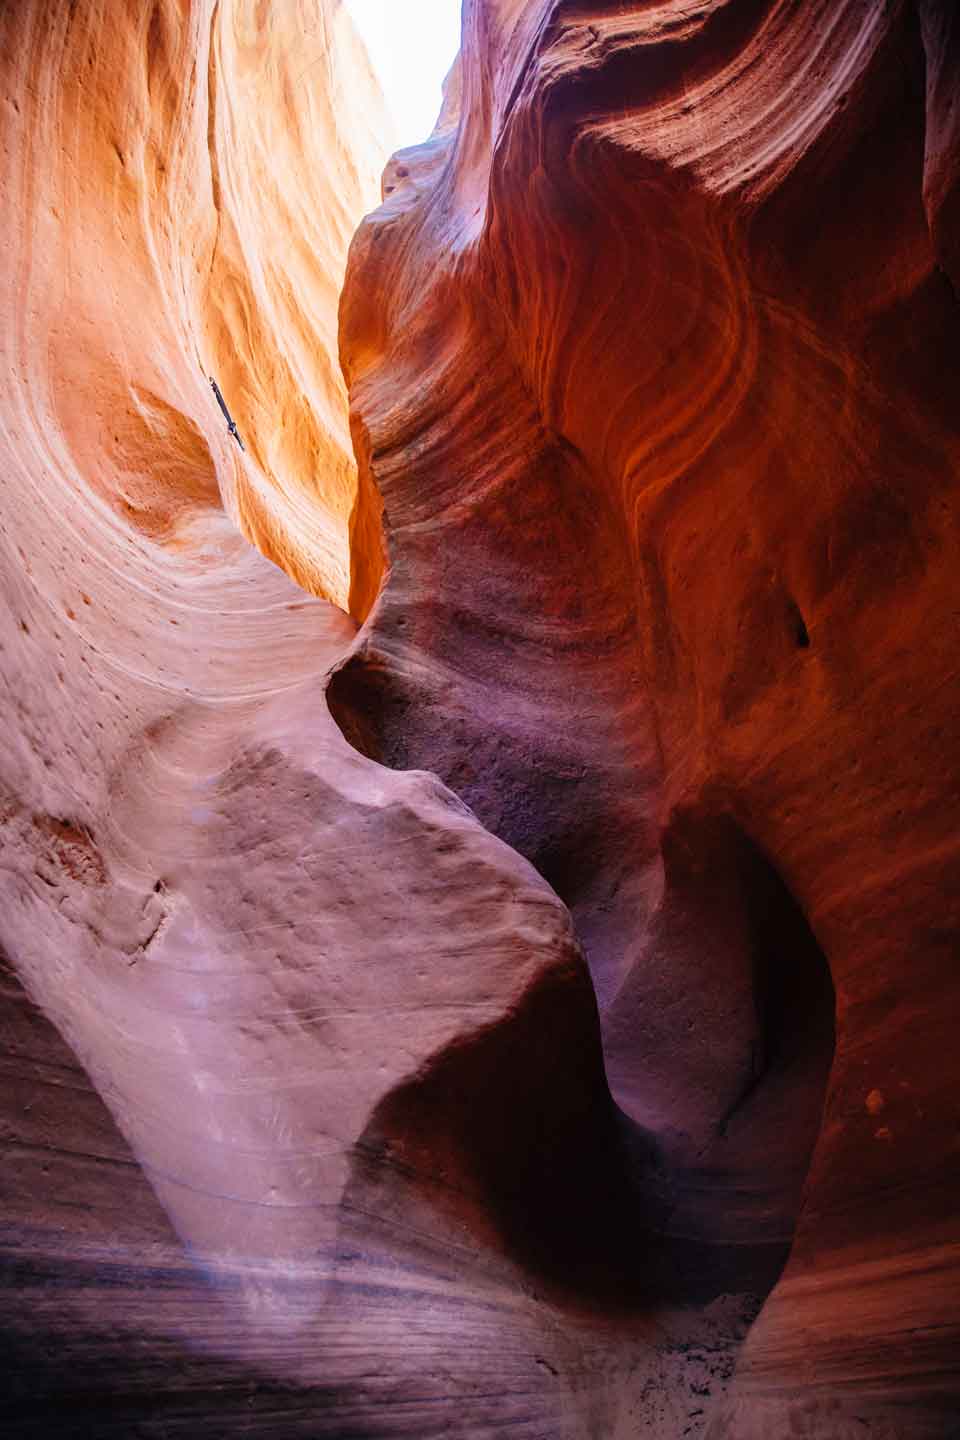 A pink and orange slot canyon